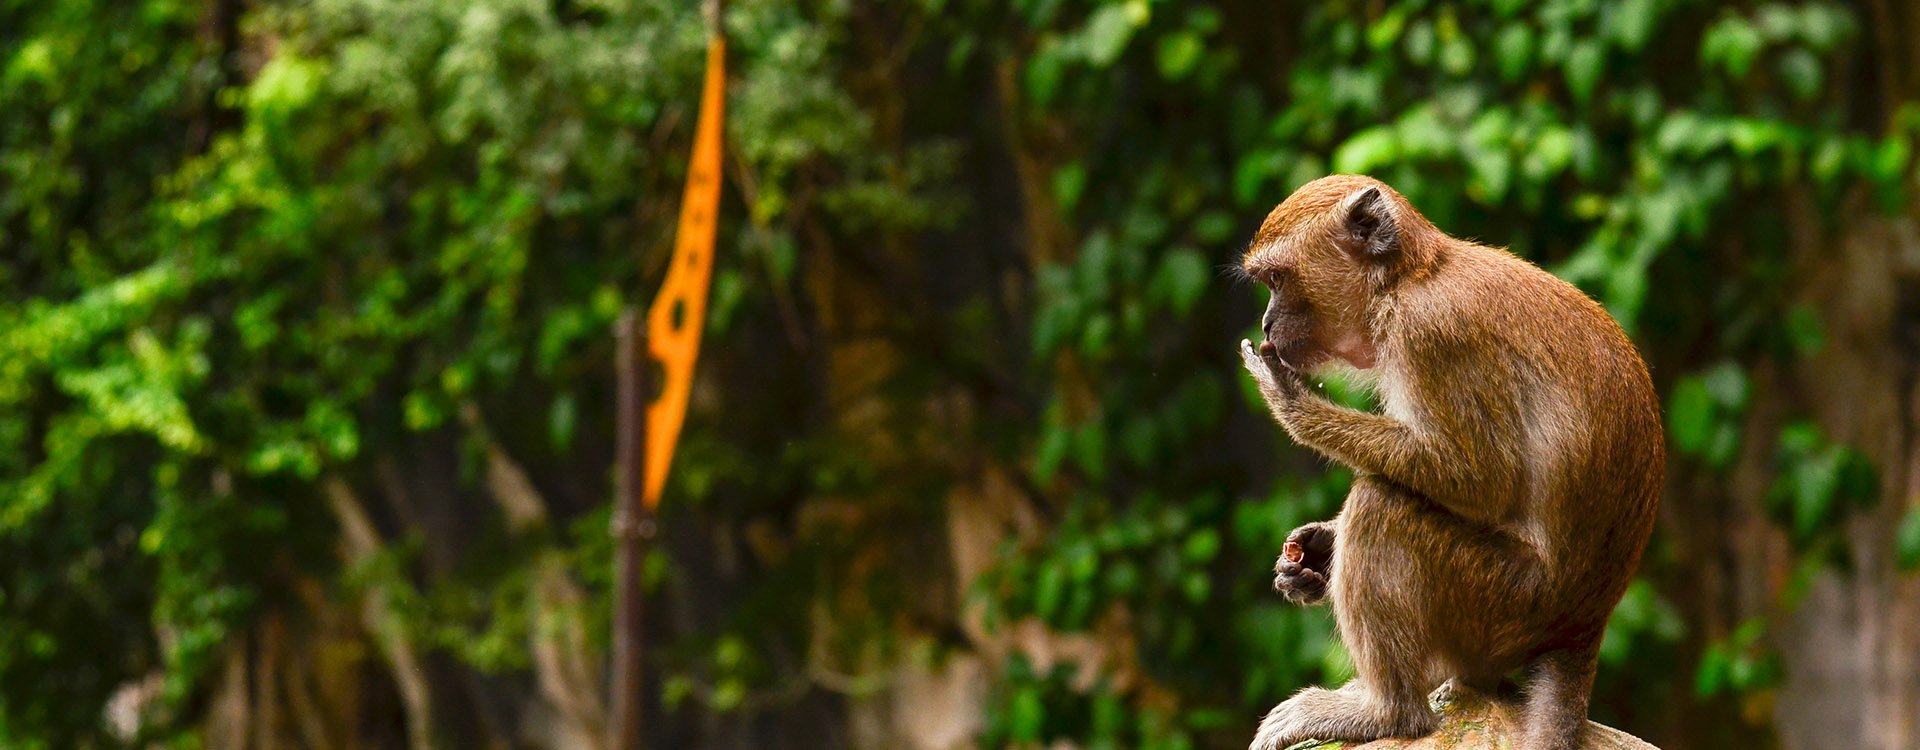 Monkey eating from his hand sitting on a pumpkin at Batu Caves, Kuala Lumpur, Malaysia